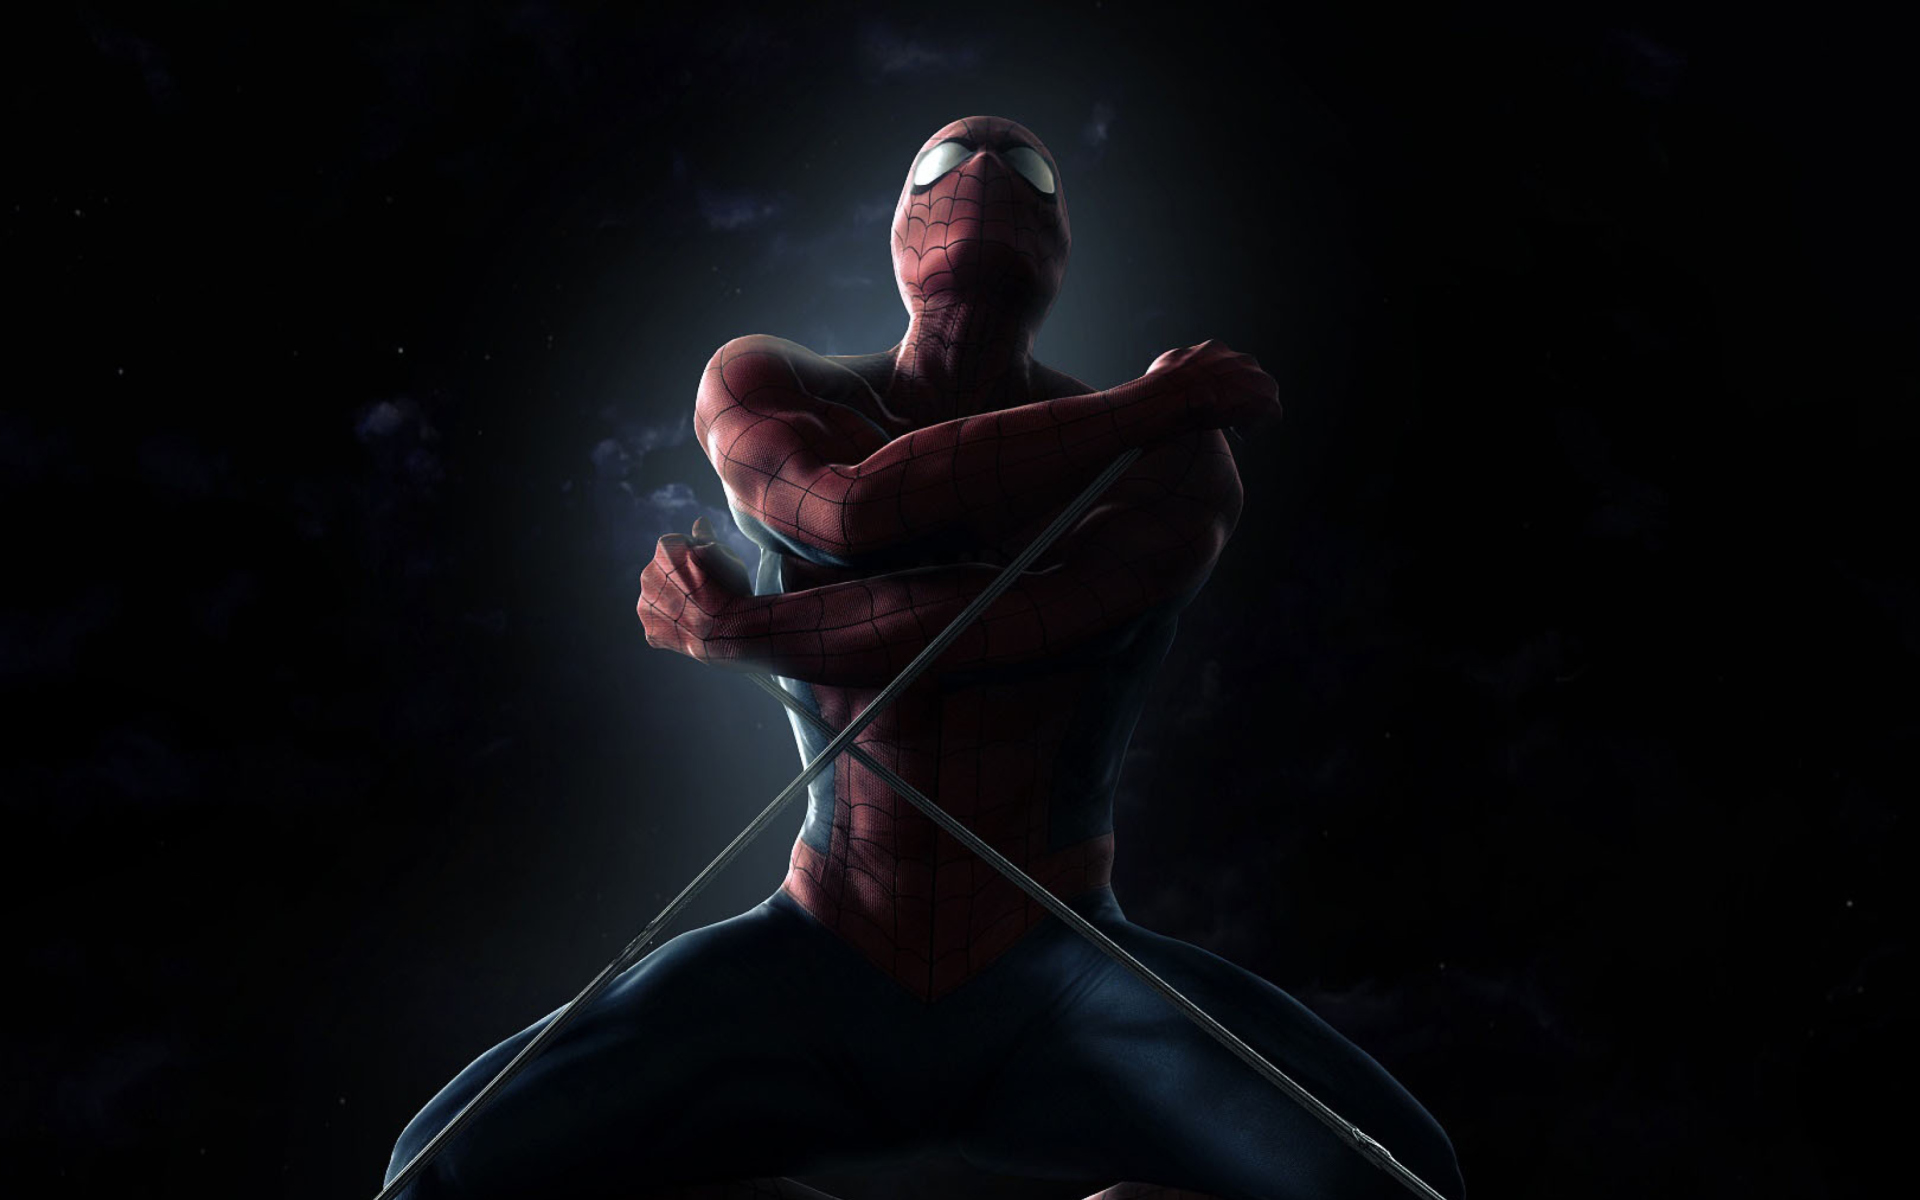 the amazing spider man full movie 2012 hd